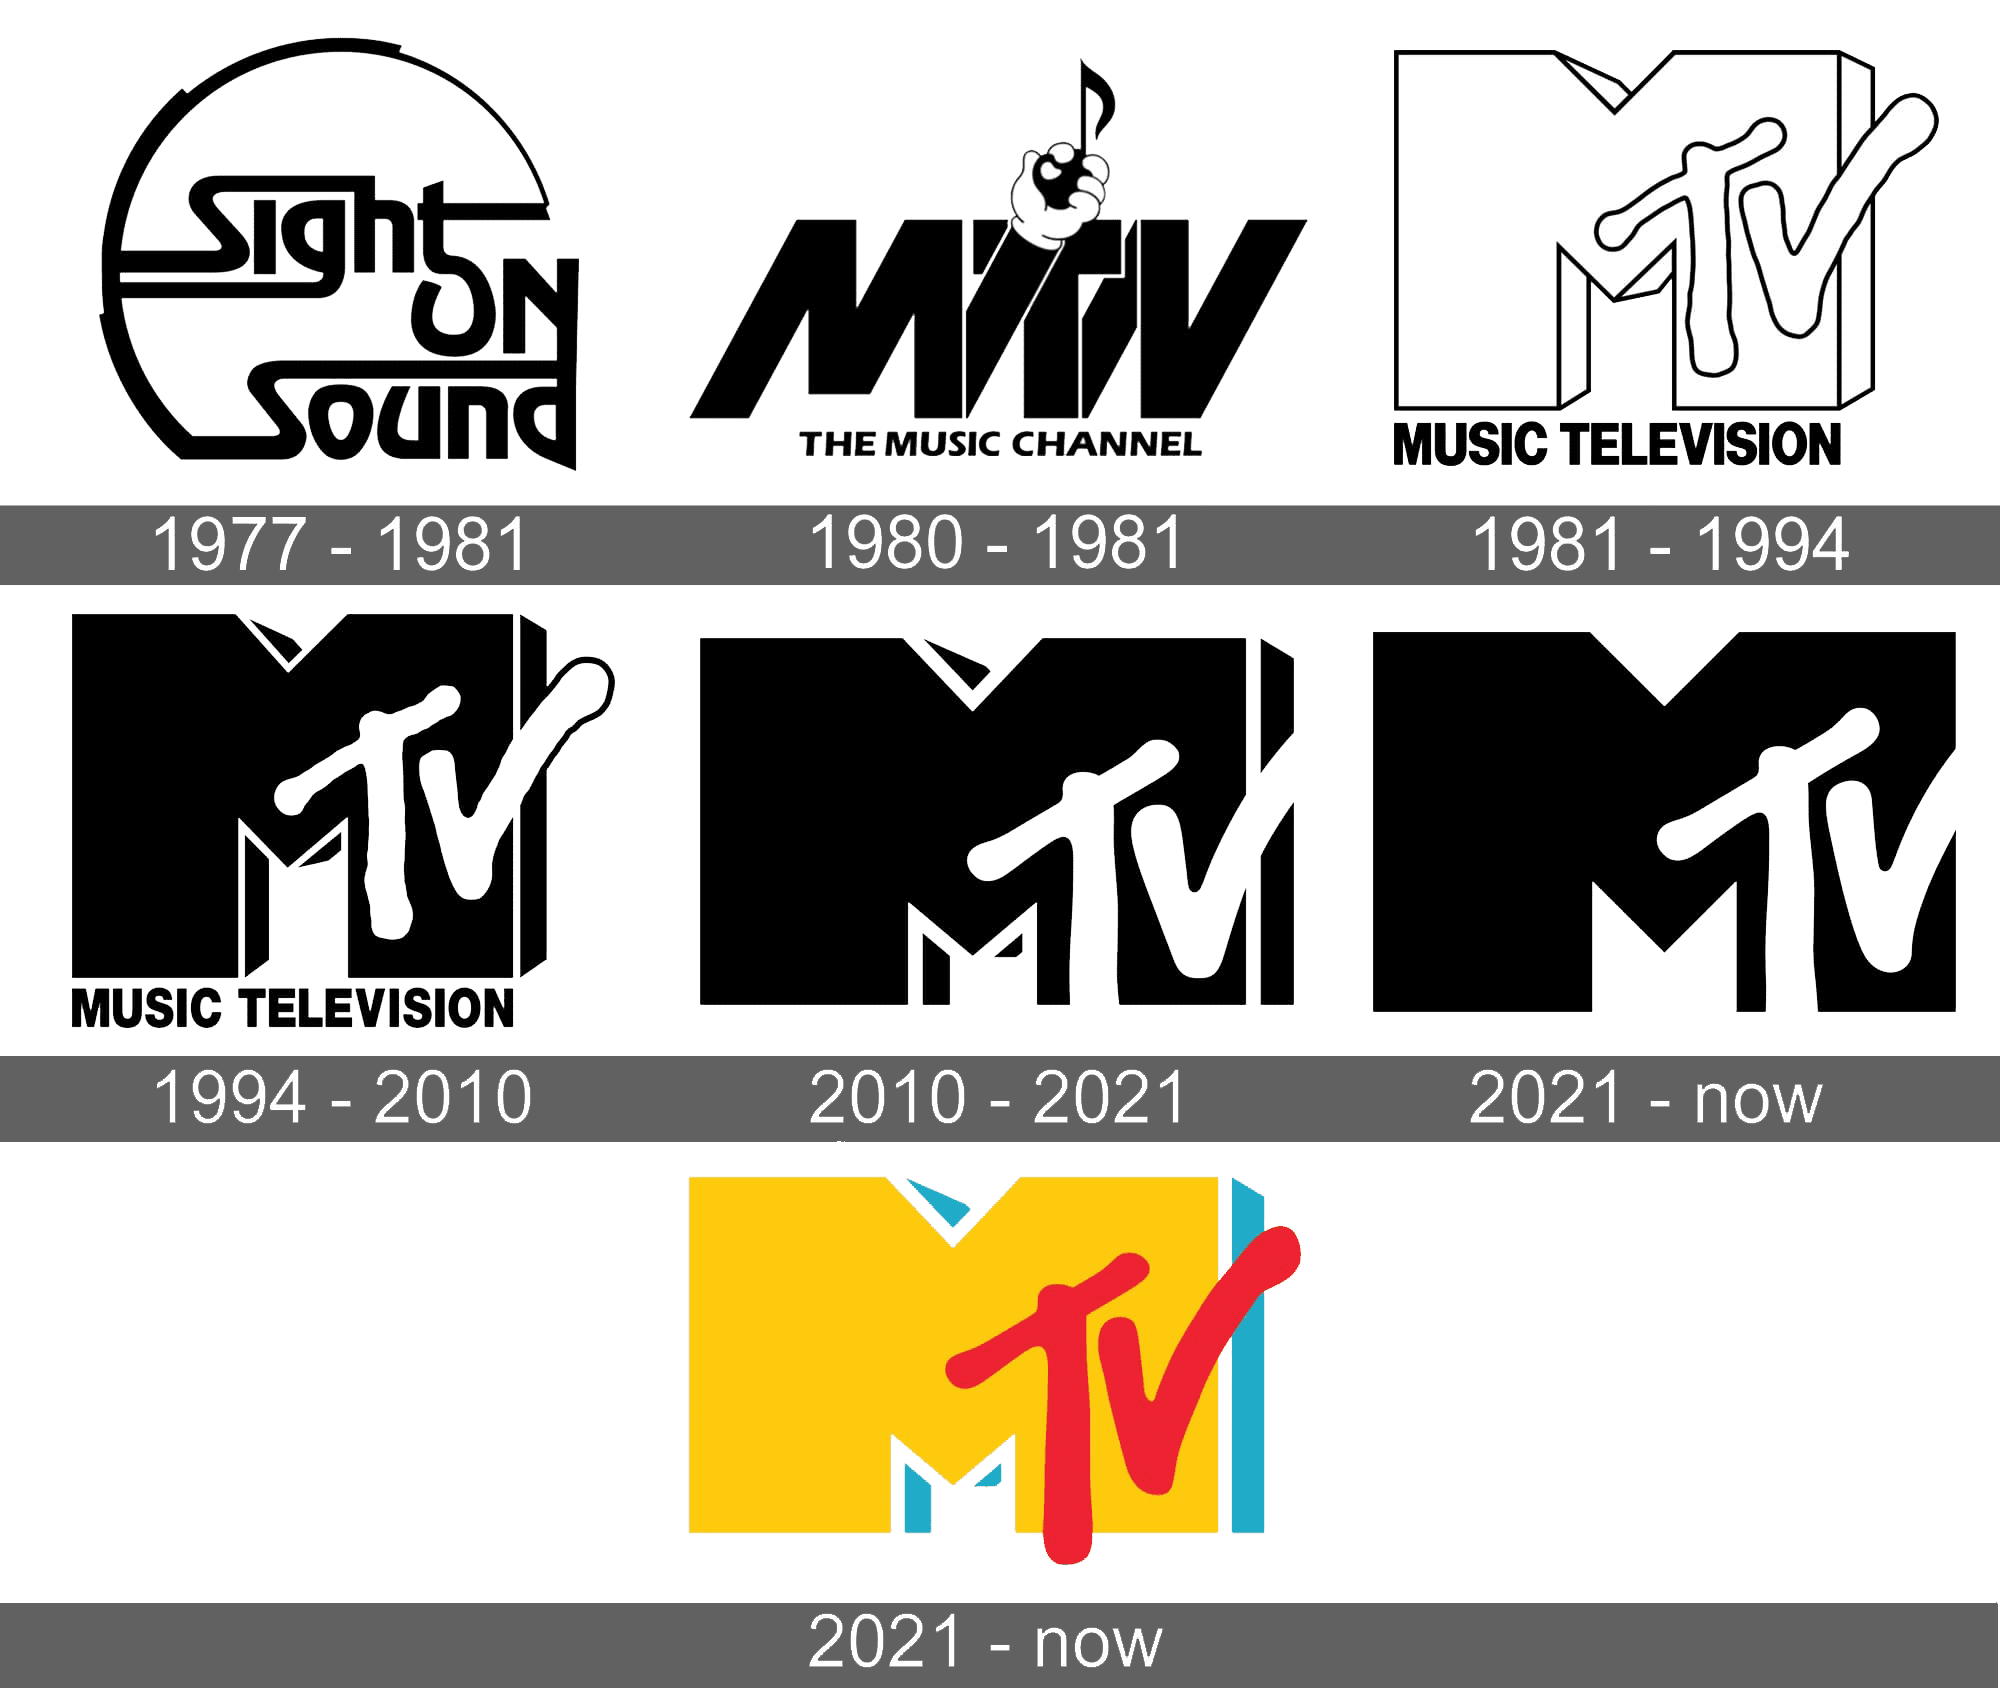 Cartoon Network Logo Design: History & Evolution